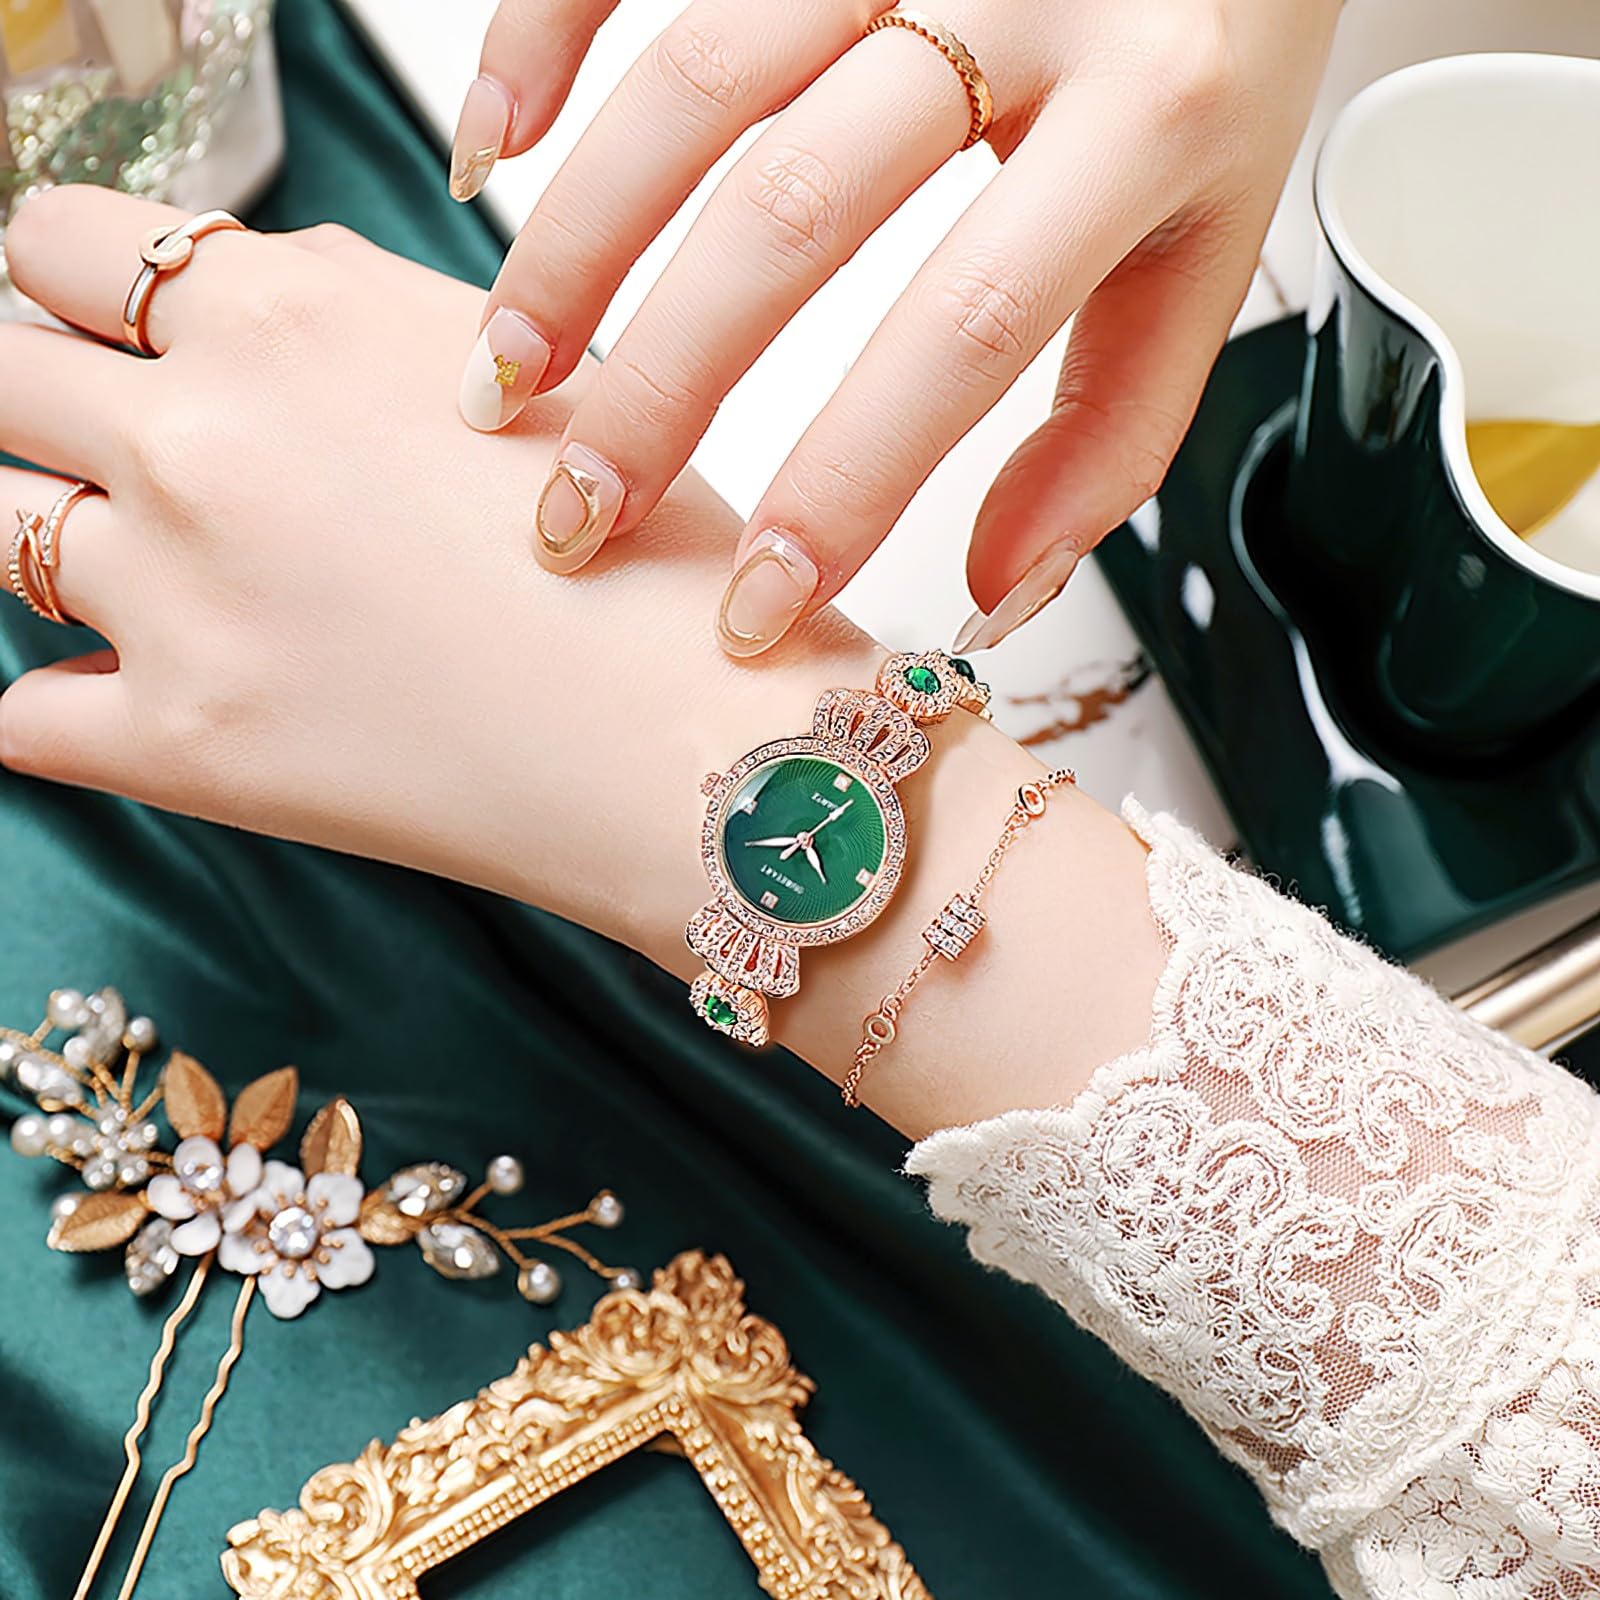 TPSOUM Wrist Watch for Women, Bracelet Designed Lady's Watch, Quartz Analog Women's Watch